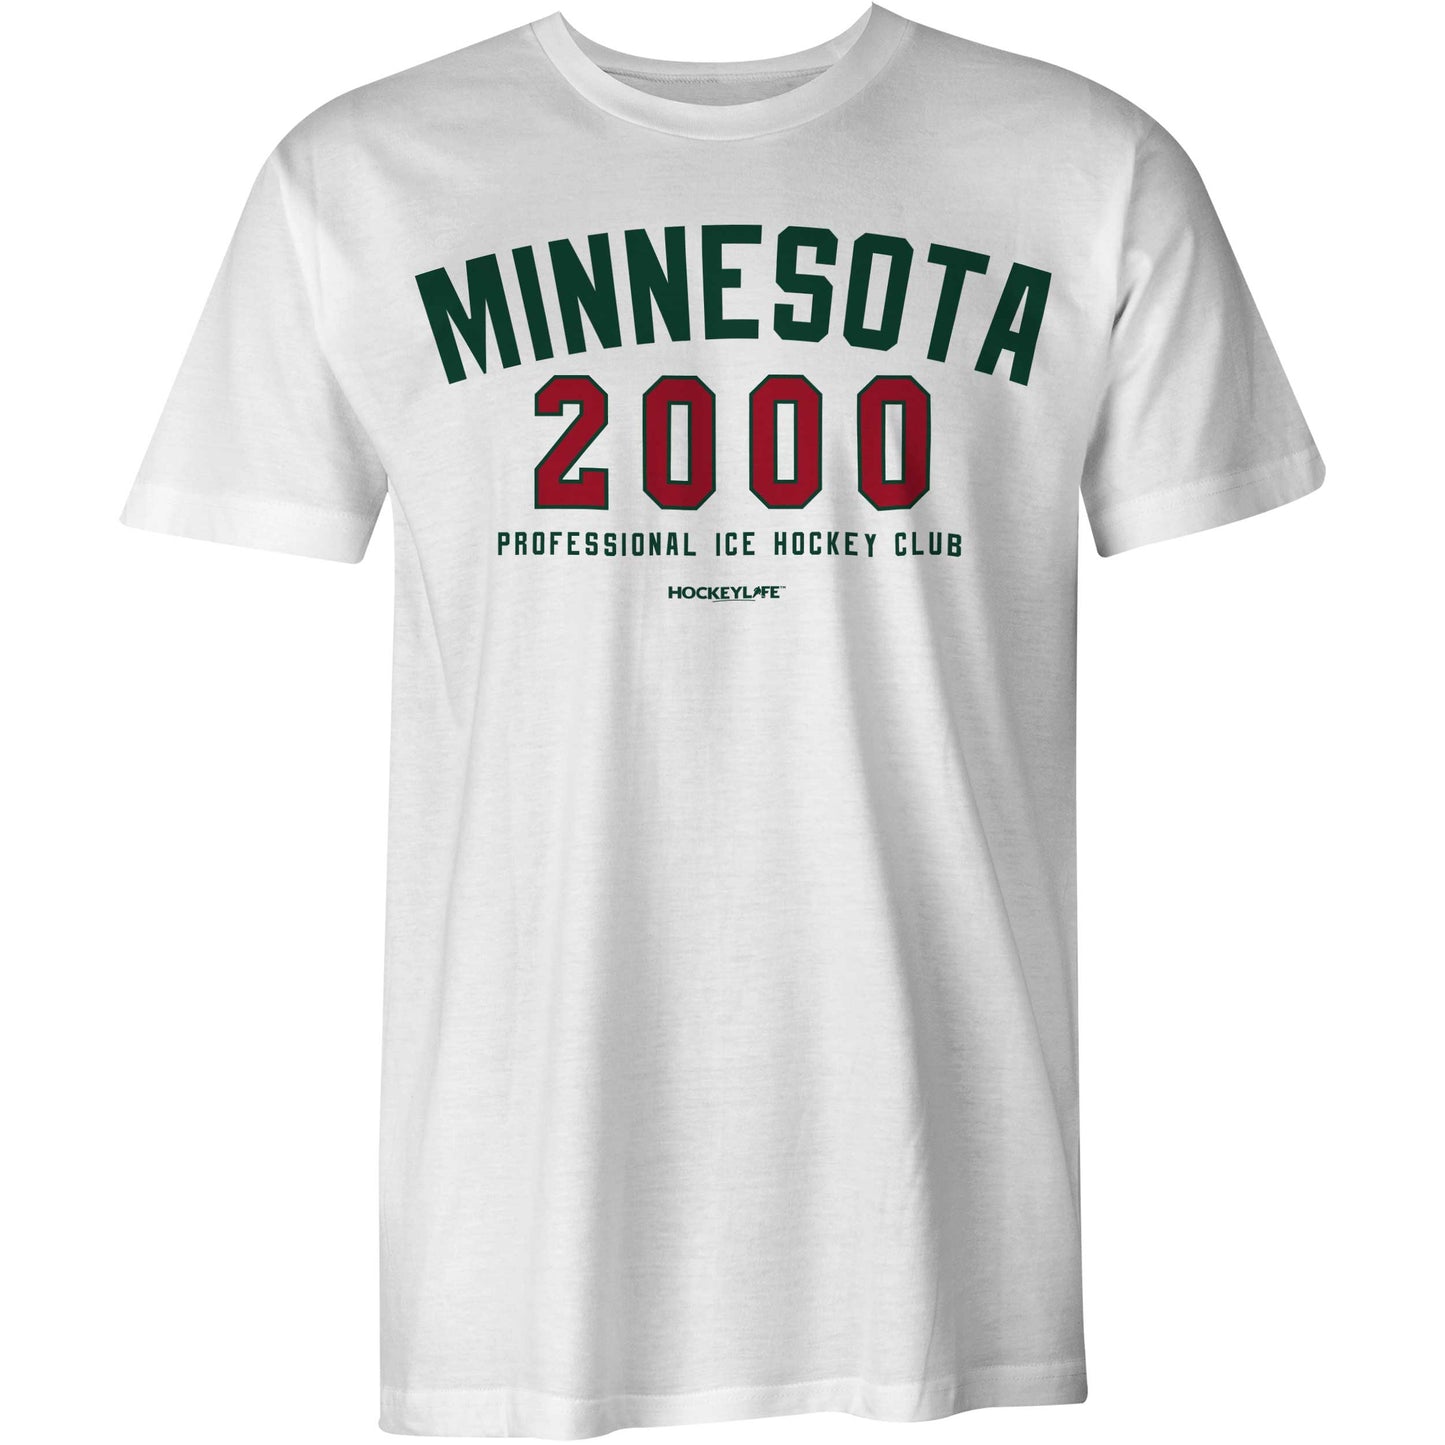 Minnesota Professional Hockey Club Tee Shirt (White)